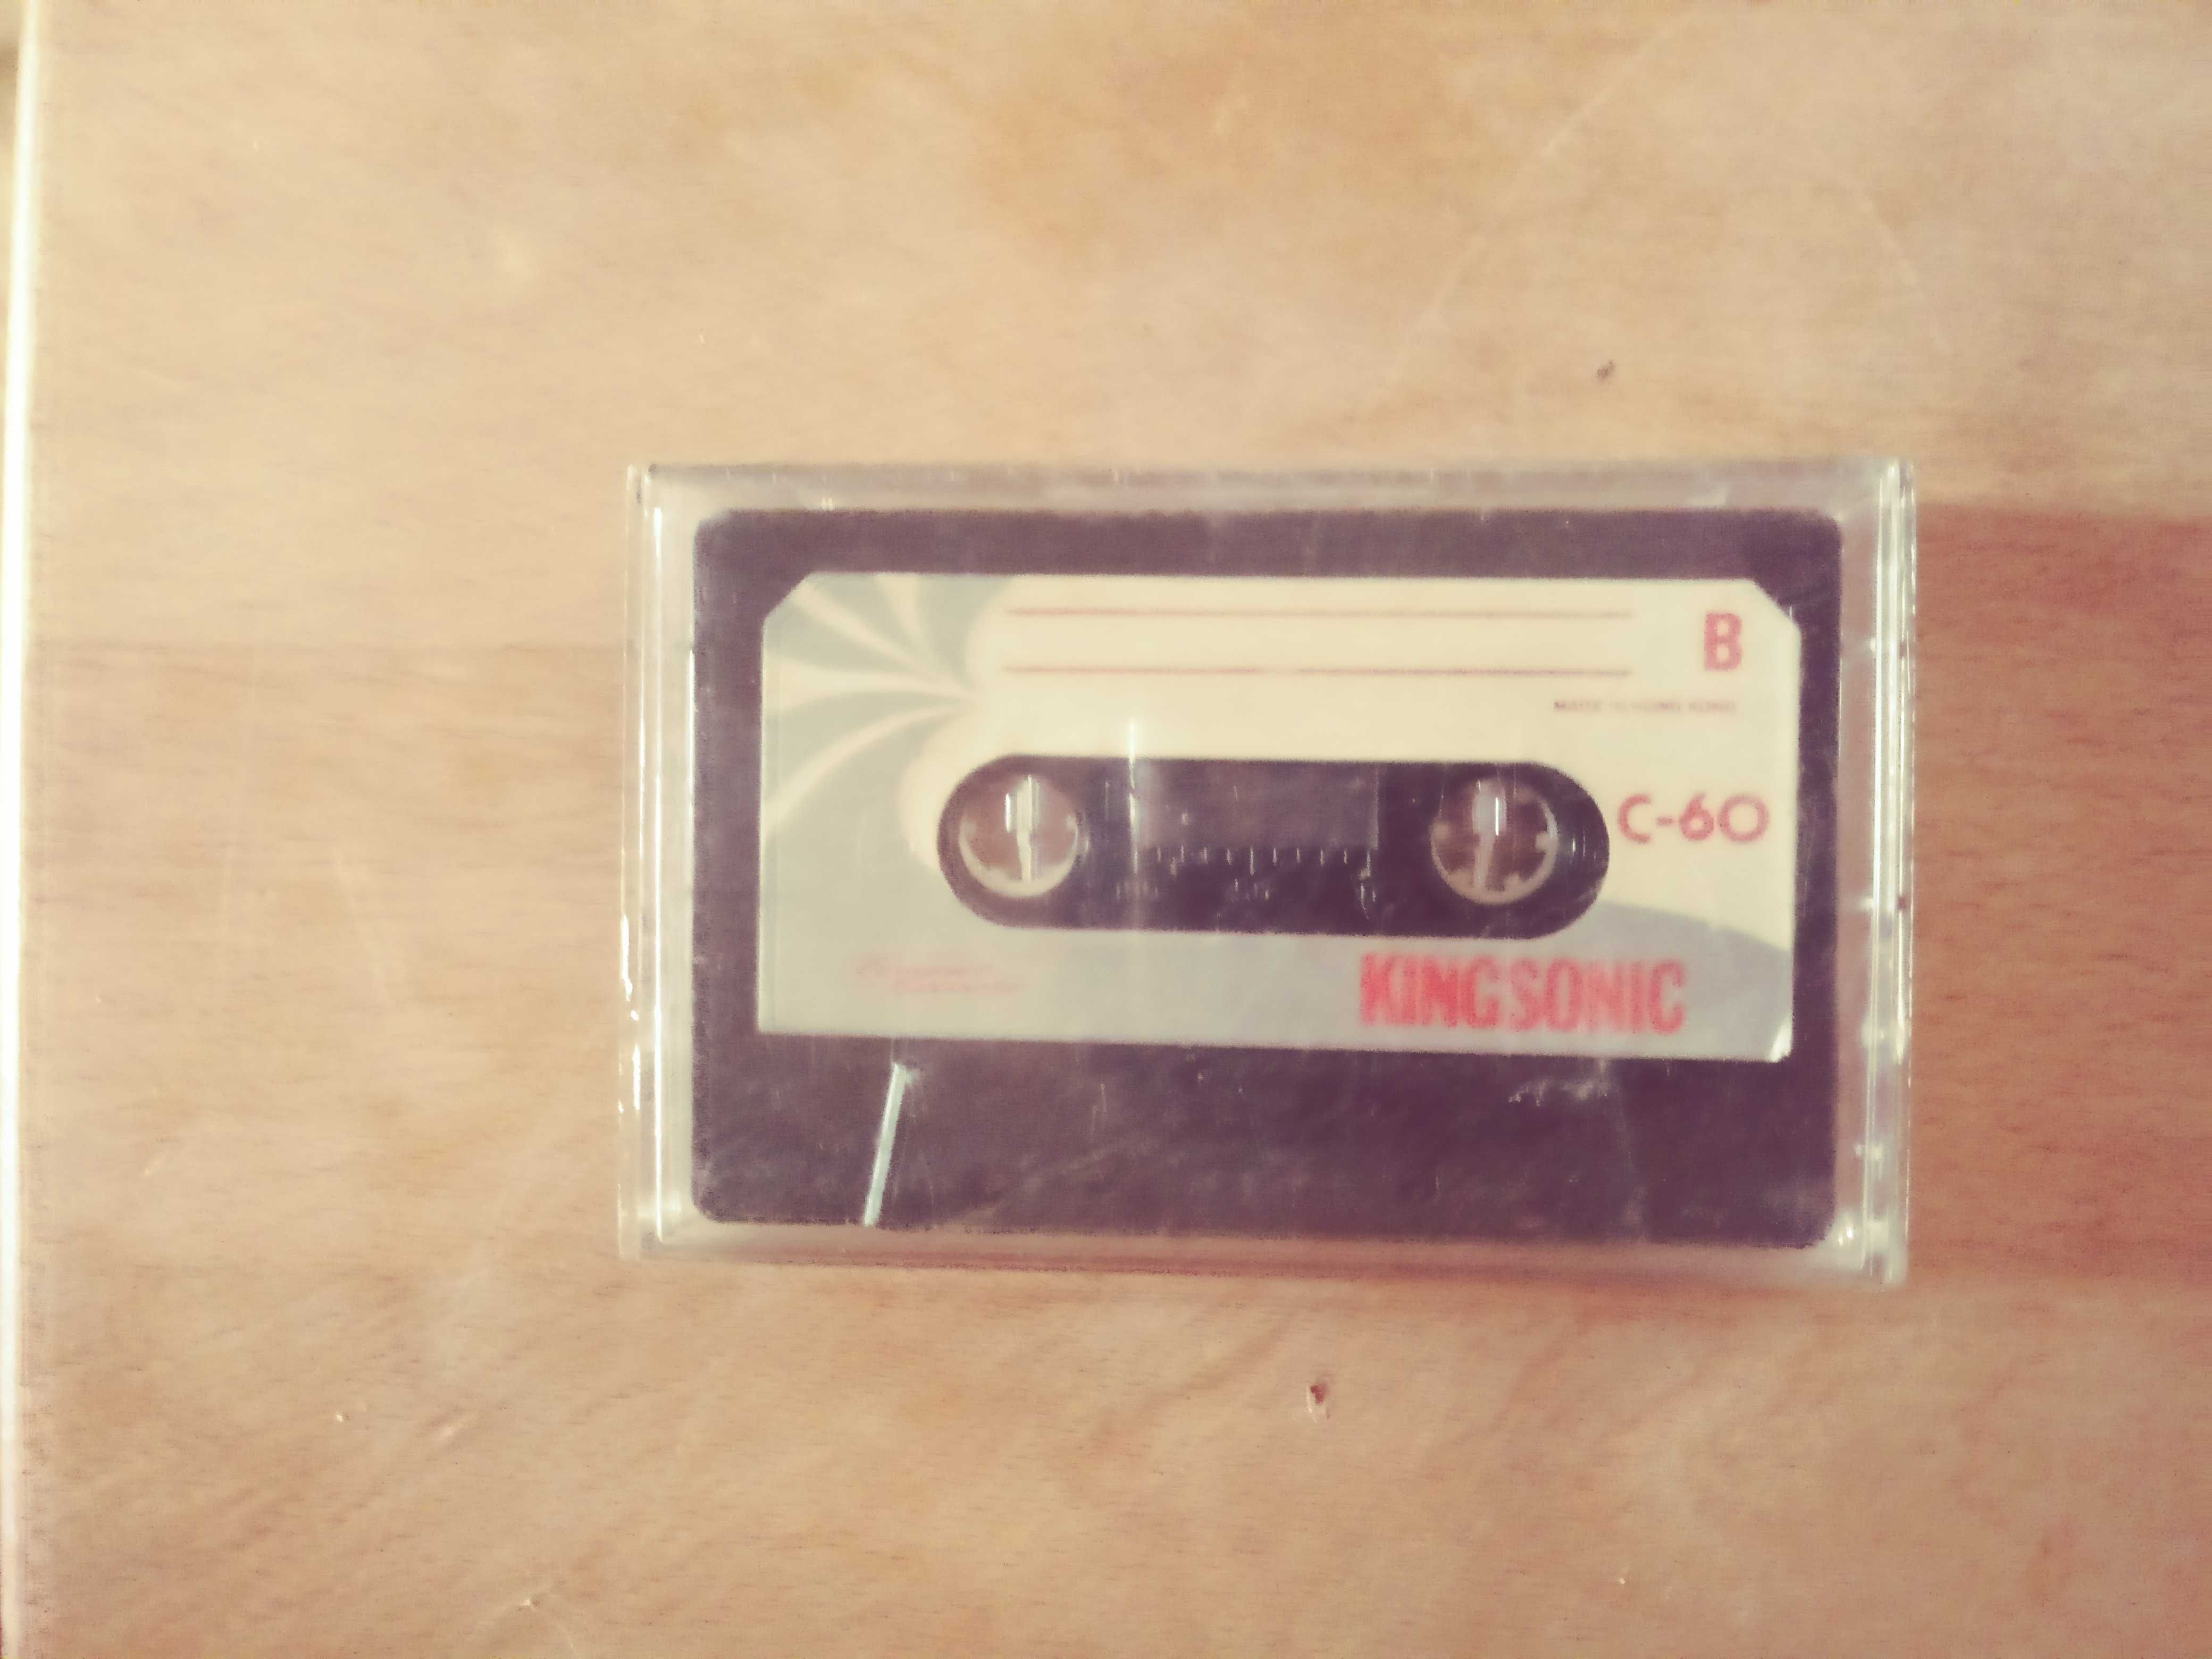 Kaeeta audio Kingsonic C-60 - lata 80. XX w. - unikat! - 15 zł!